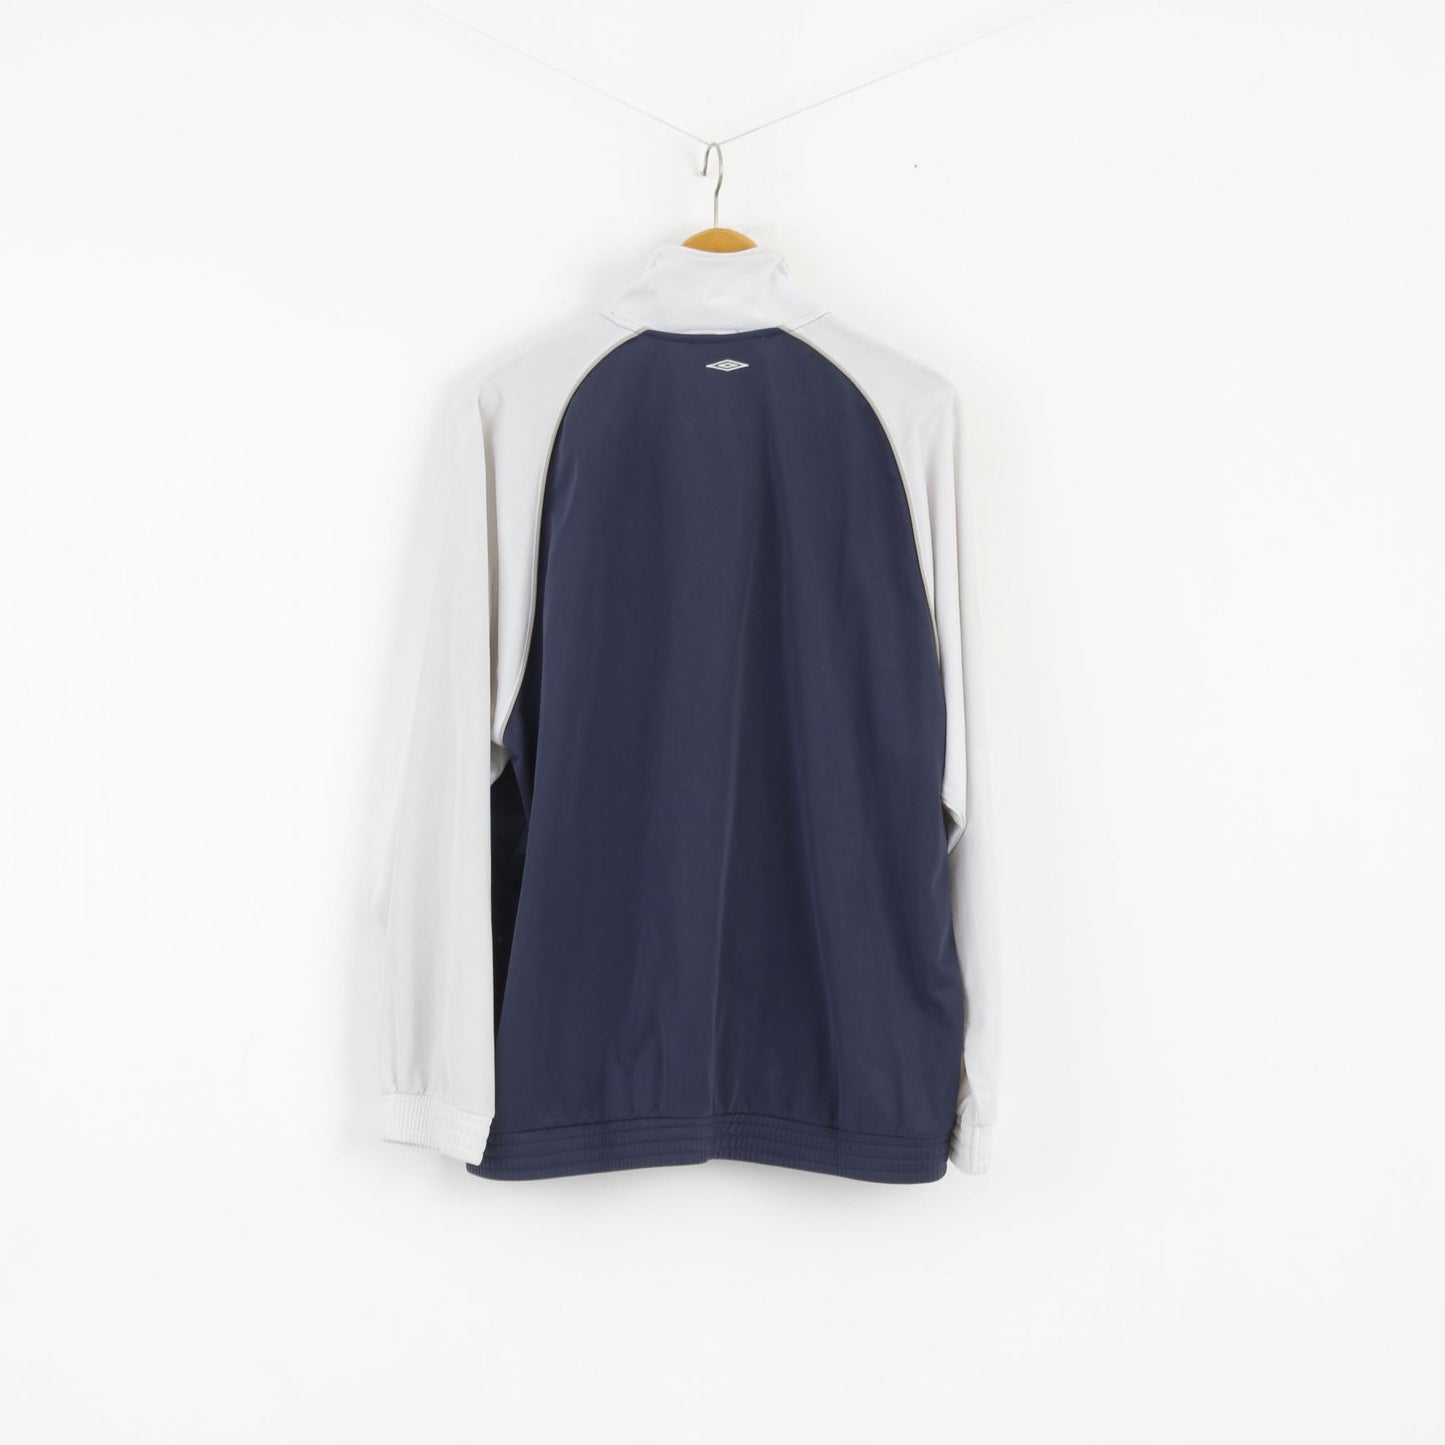 Umbro Hommes XL Sweatshirt Marine Blanc Brillant Full Zipper Active Track Top